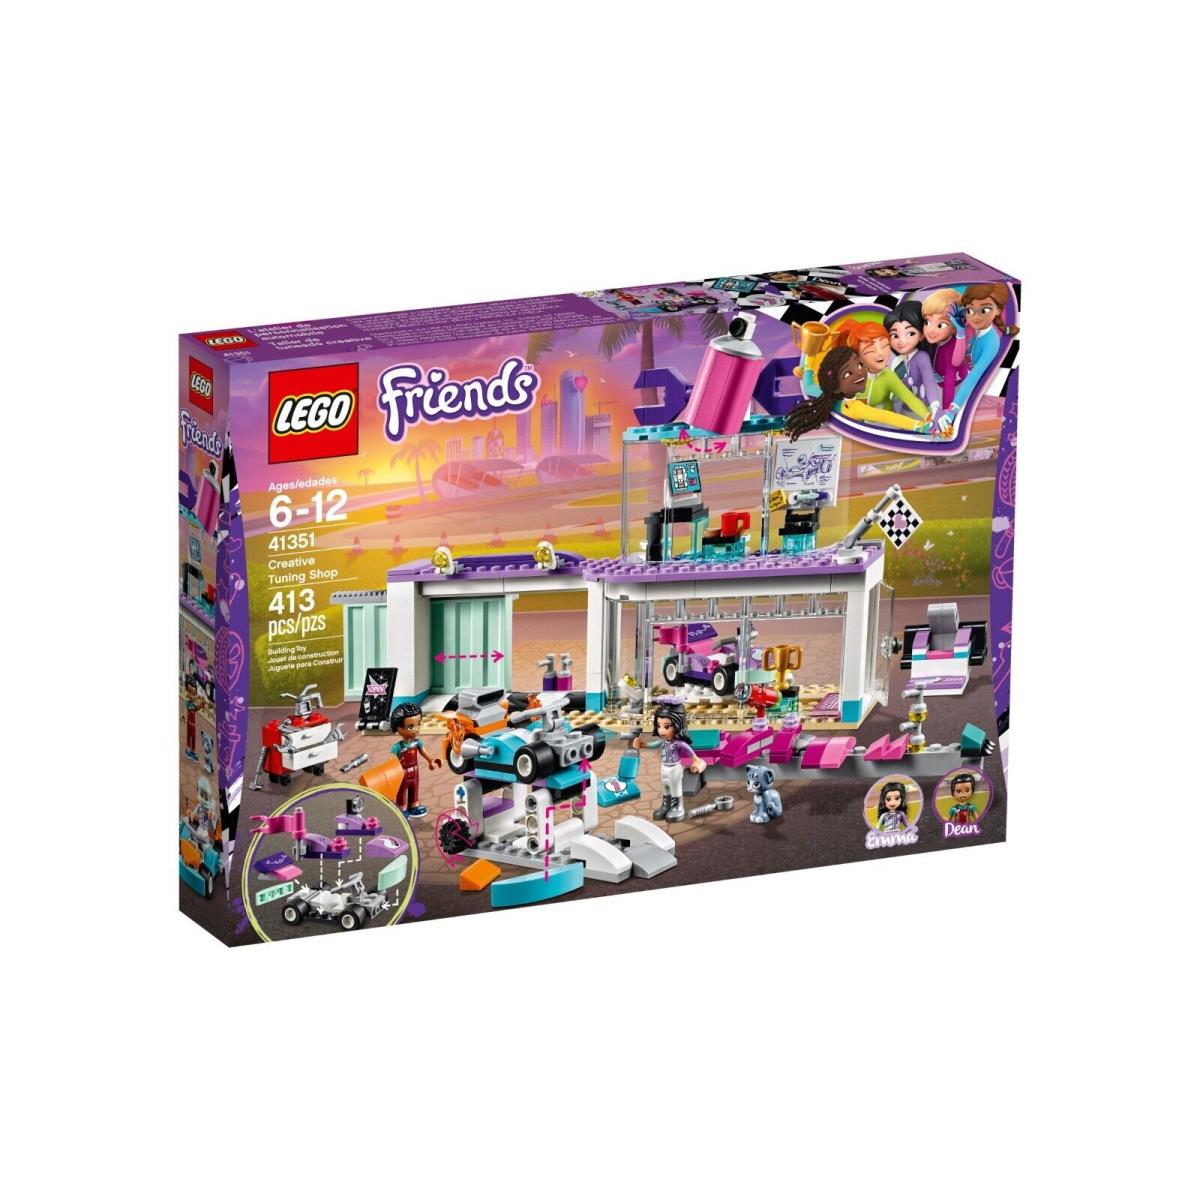 Lego 41351 Friends Creative Tuning Shop Retired Box